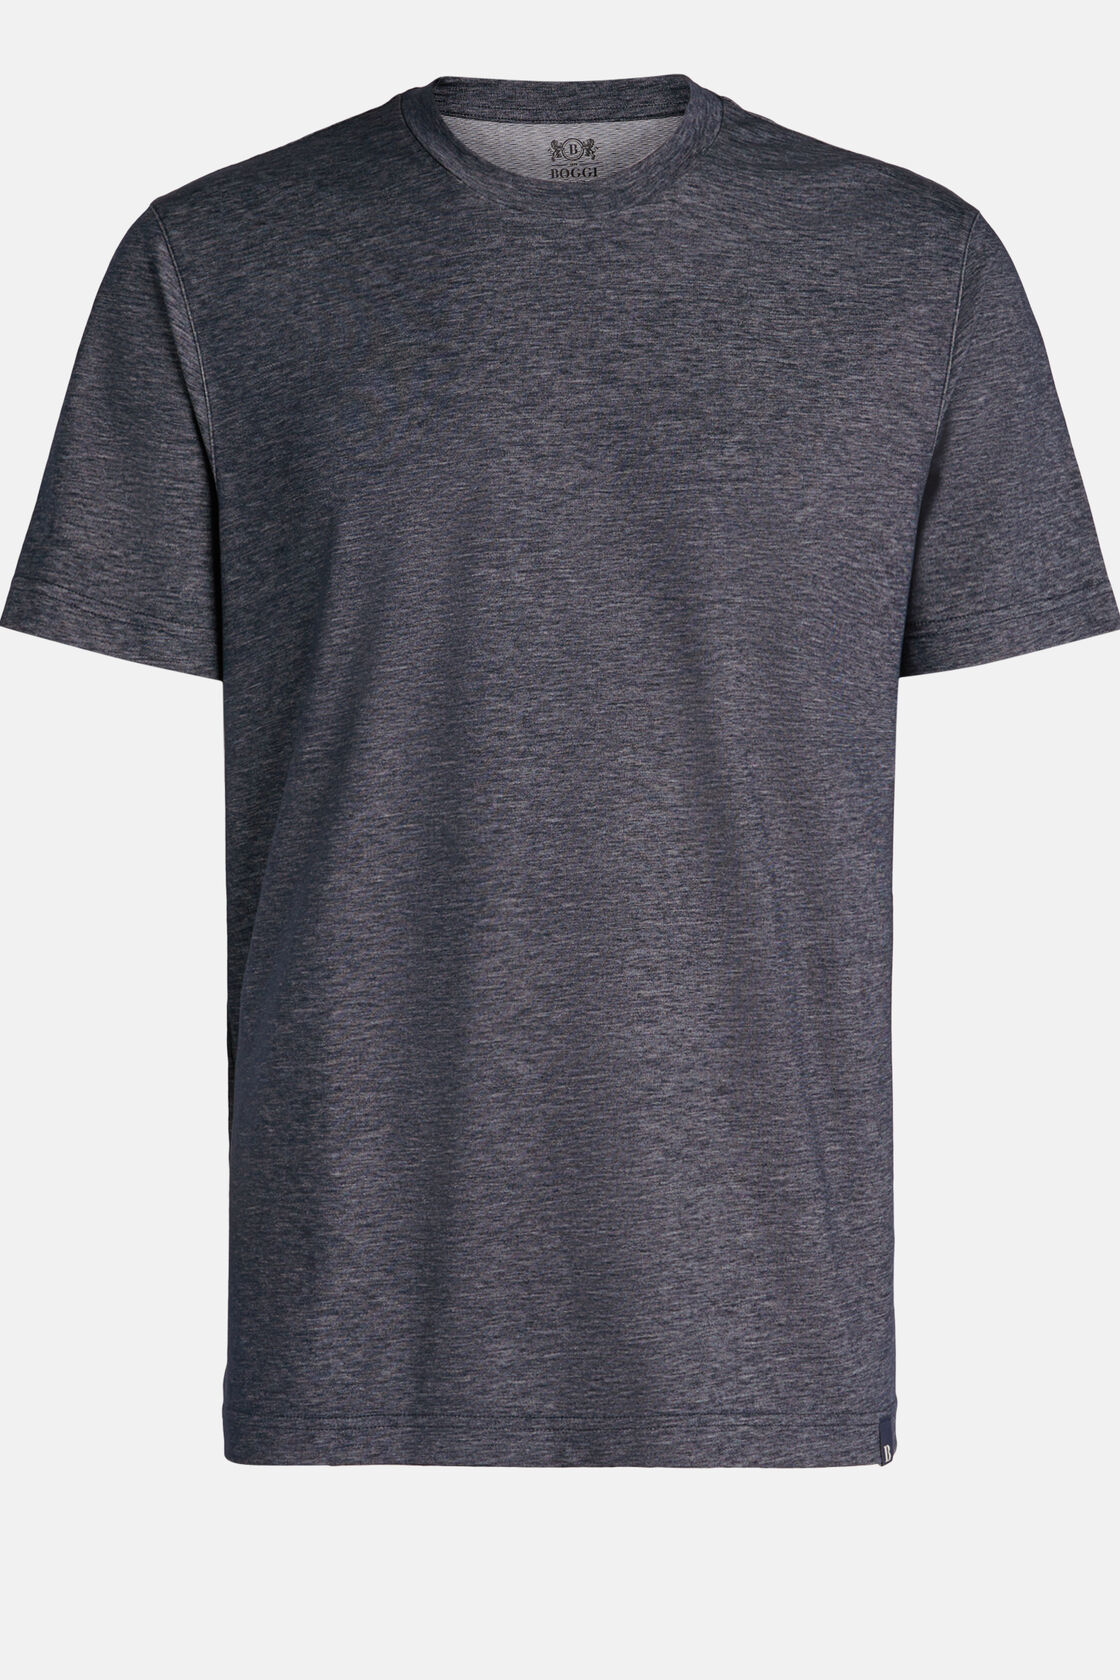 T-Shirt in Cotton, Nylon & Tencel, Navy blue, hi-res